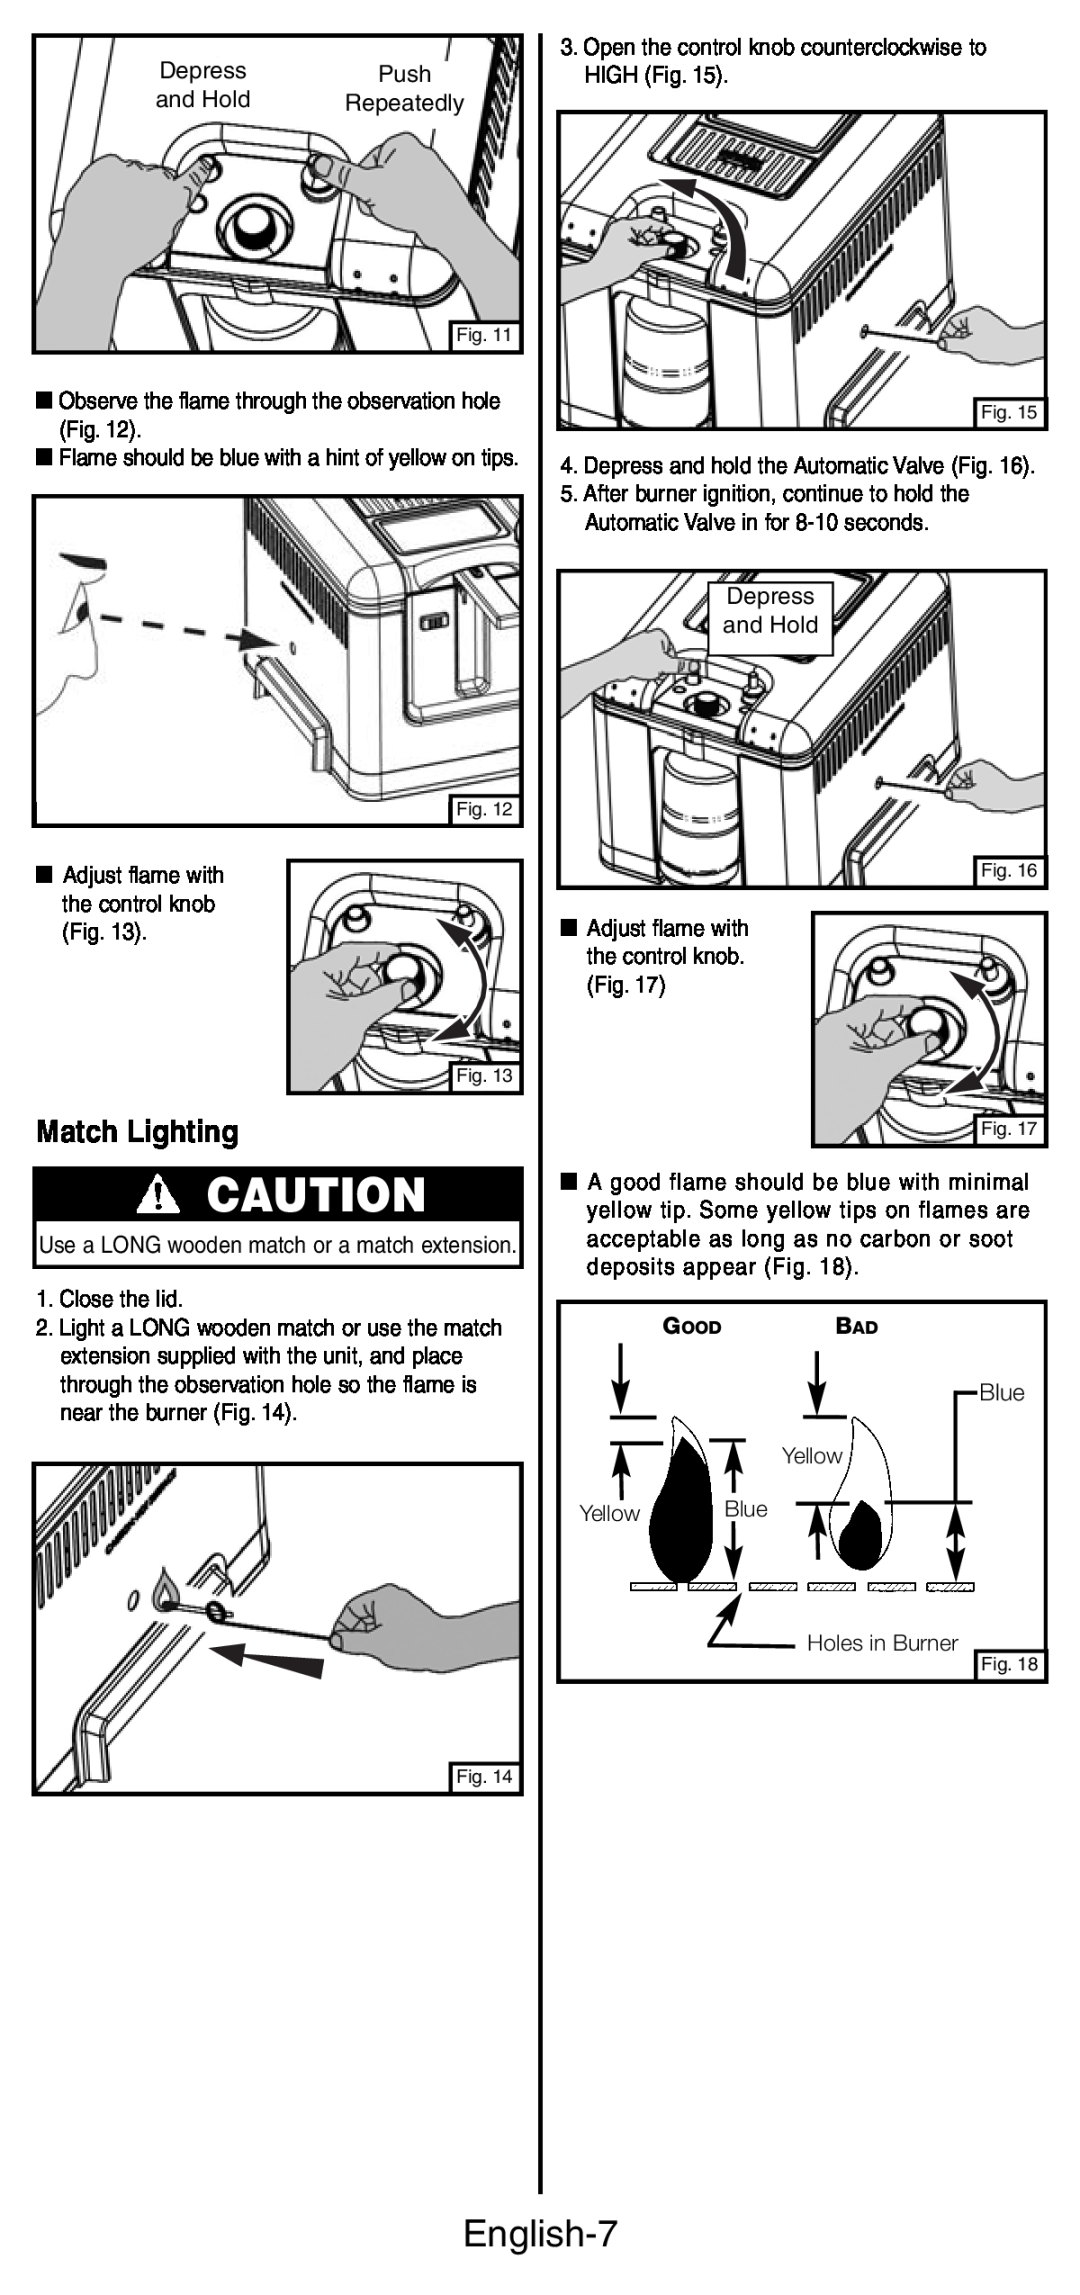 Coleman 9937 instruction manual English-7, Match Lighting 